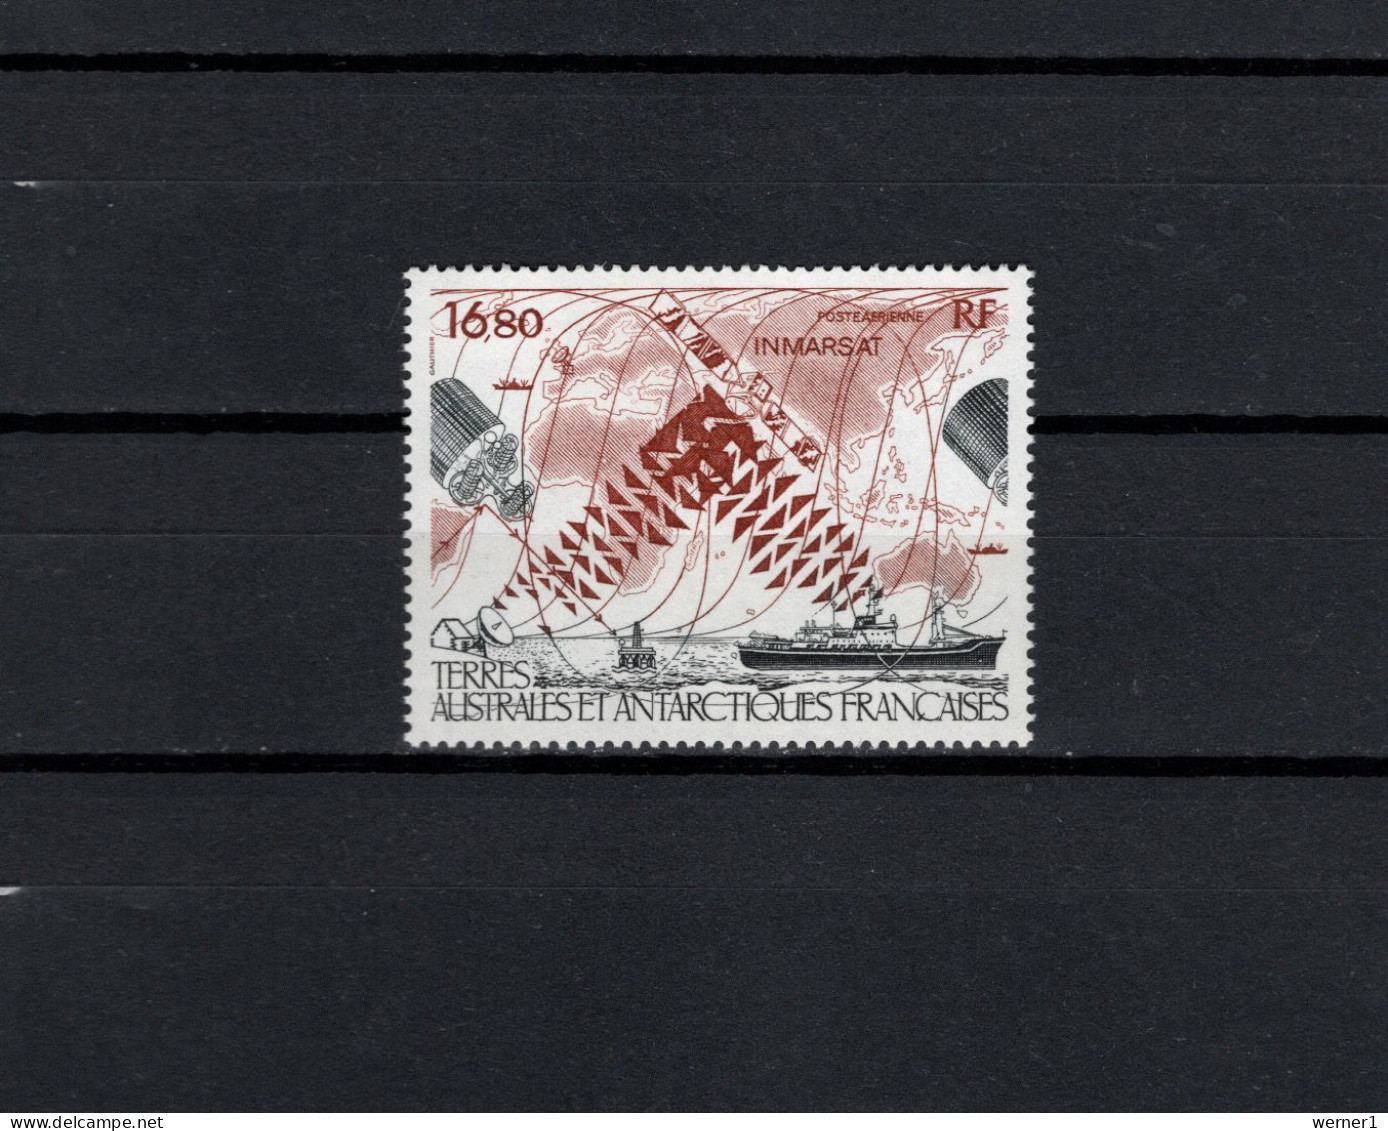 FSAT French Antarctic Territory 1987 Space, INMARSAT Stamp MNH - Océanie